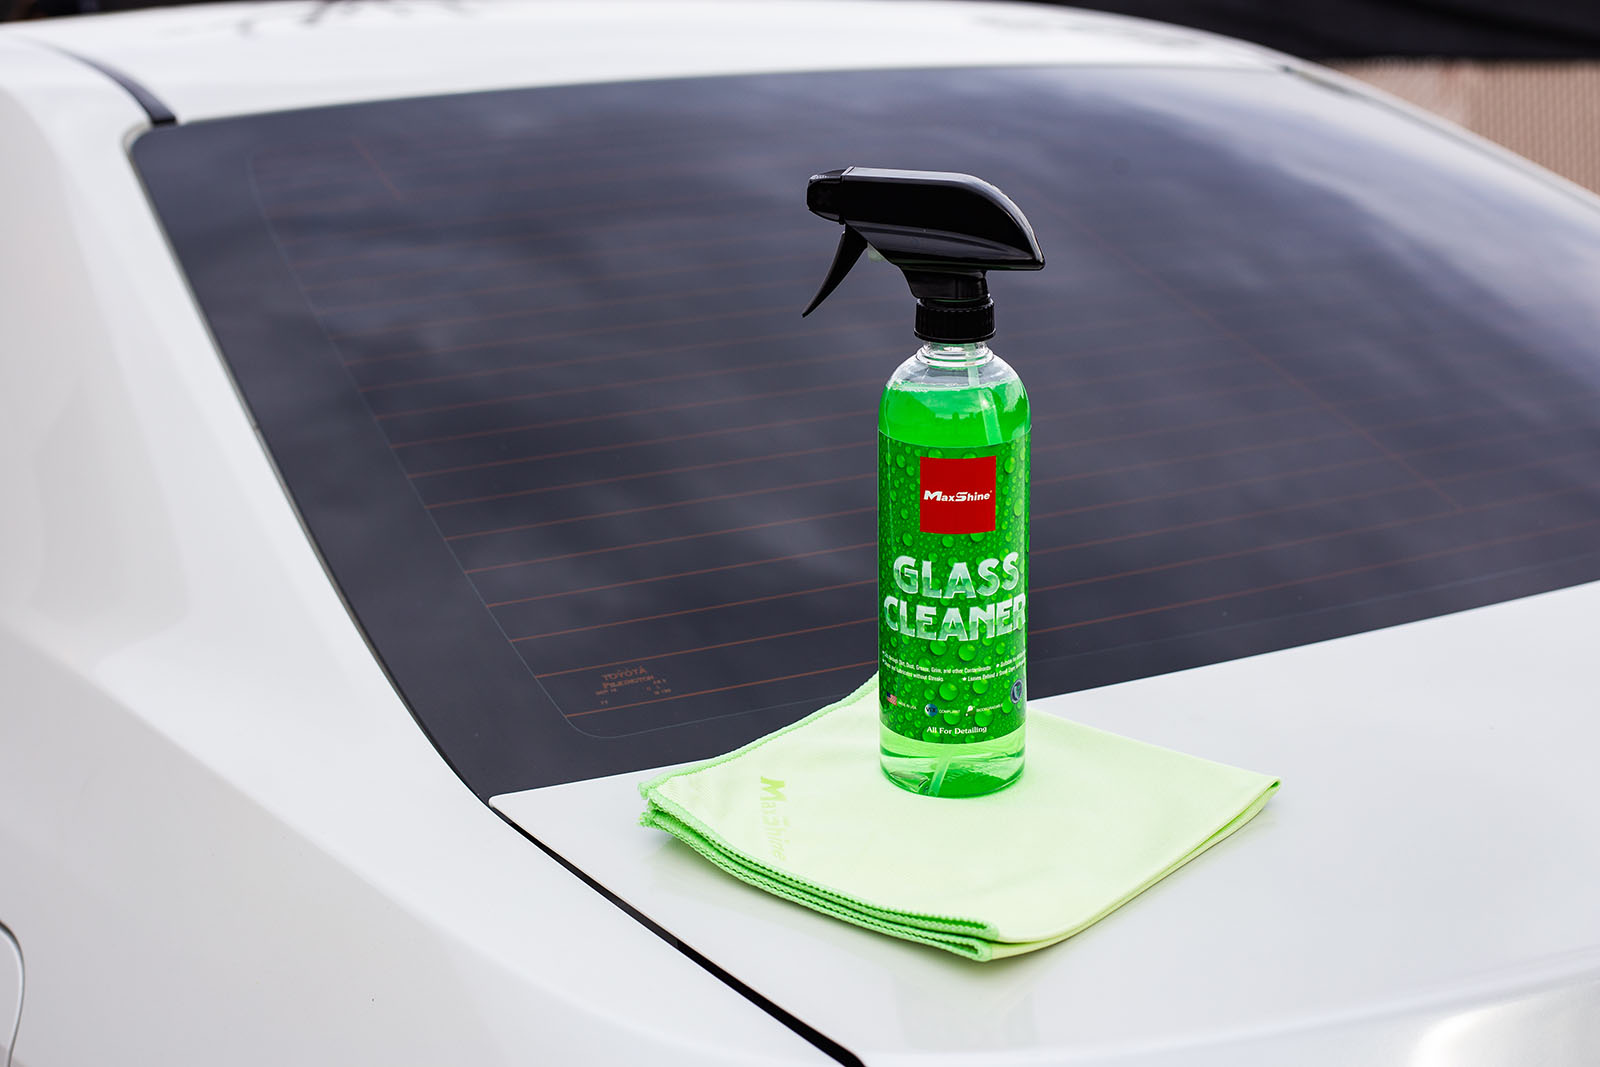 The Car Window Cleaner - MaxShine Glass Cleaner